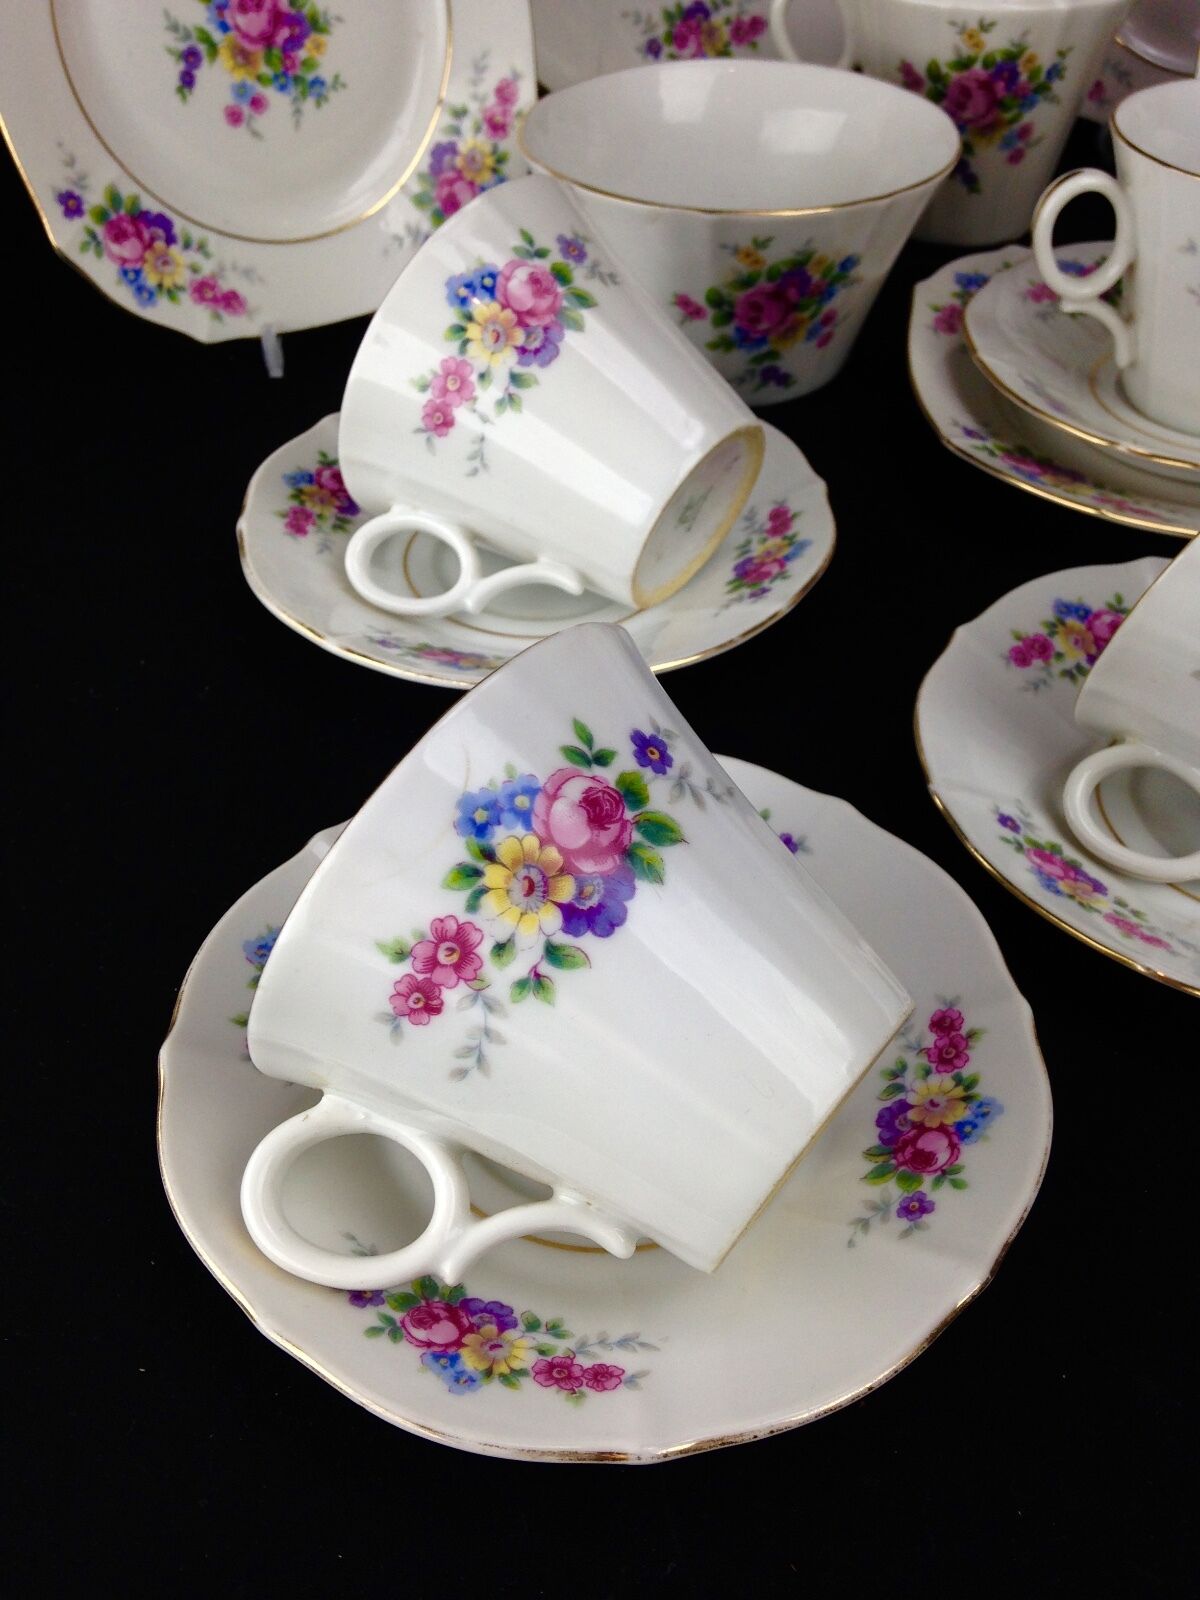 Czech Slovakia Tea Set / Afternoon Tea / Vintage / Floral / For 4 People